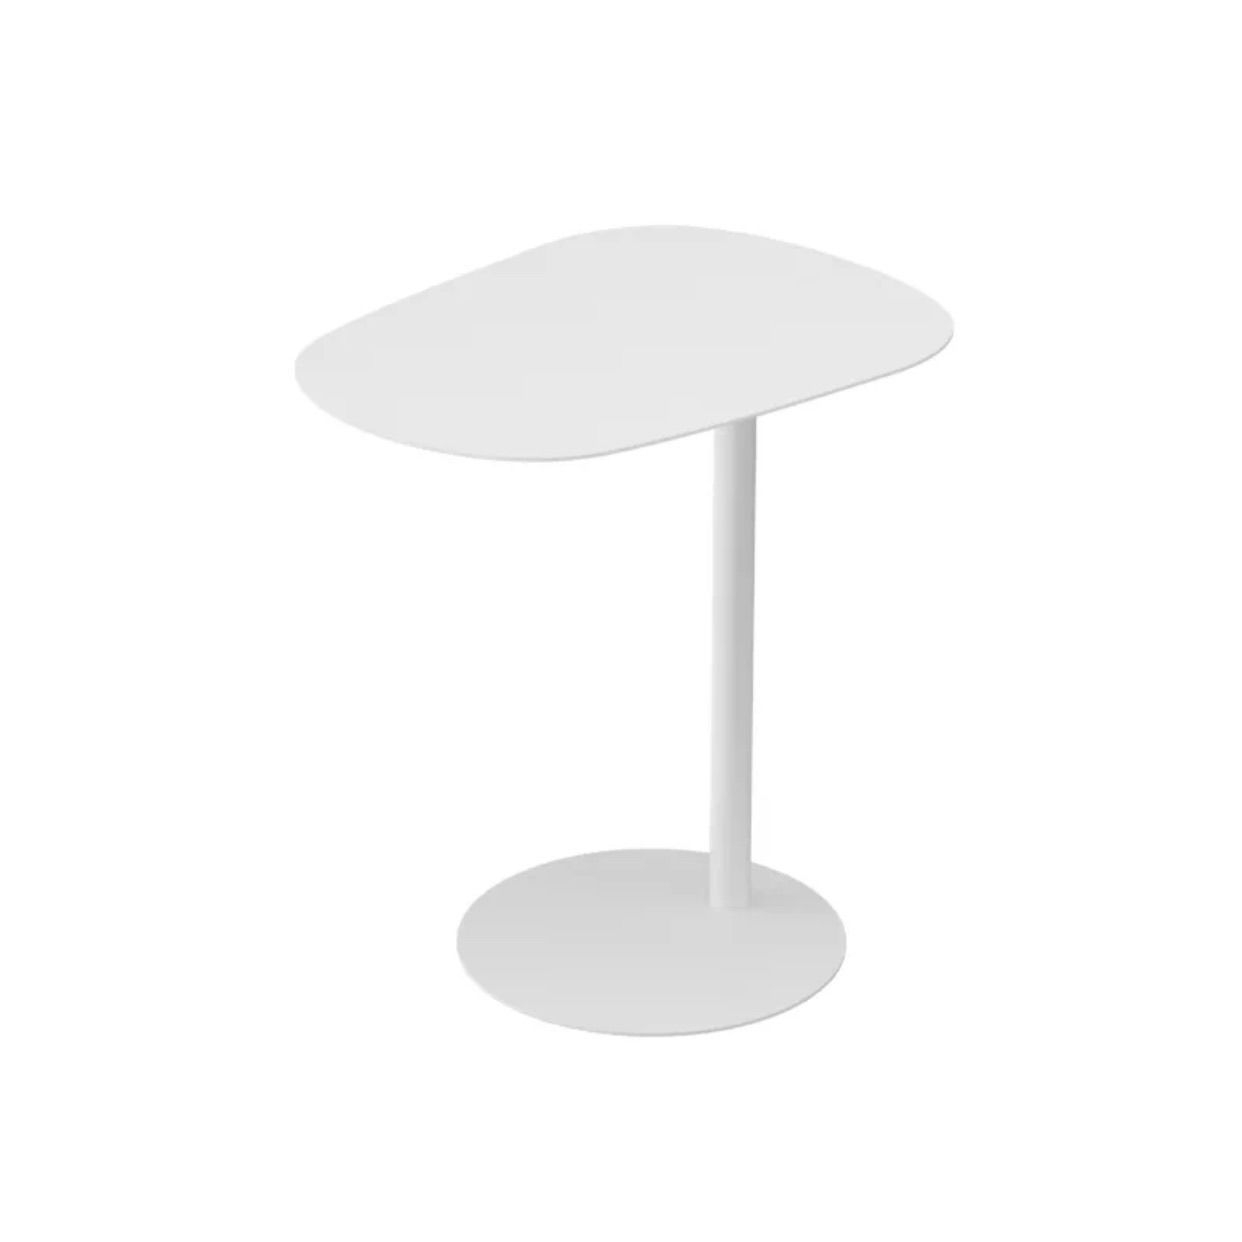 【立減$150】北歐鐵藝邊桌 Metal C Shaped Side Table L53*W38*H63cm